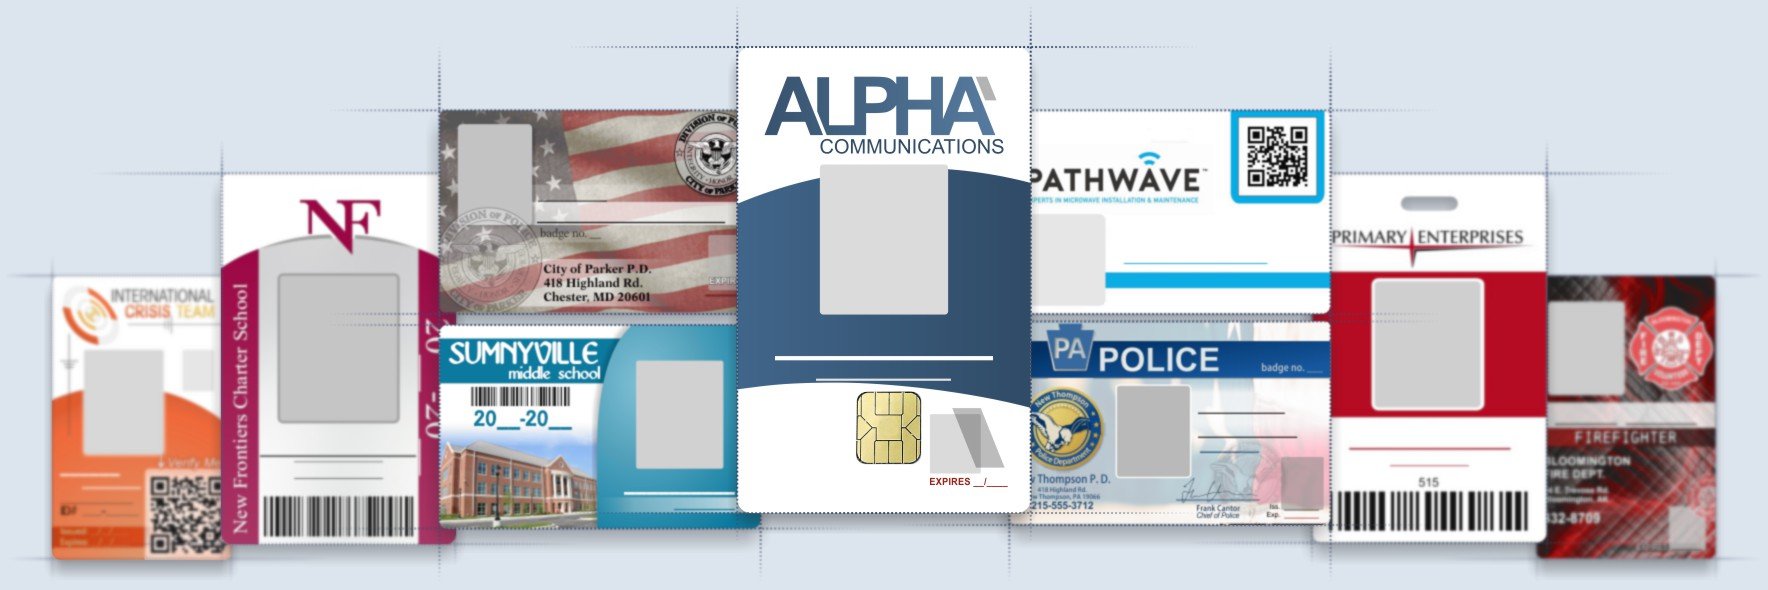 ID card design spread